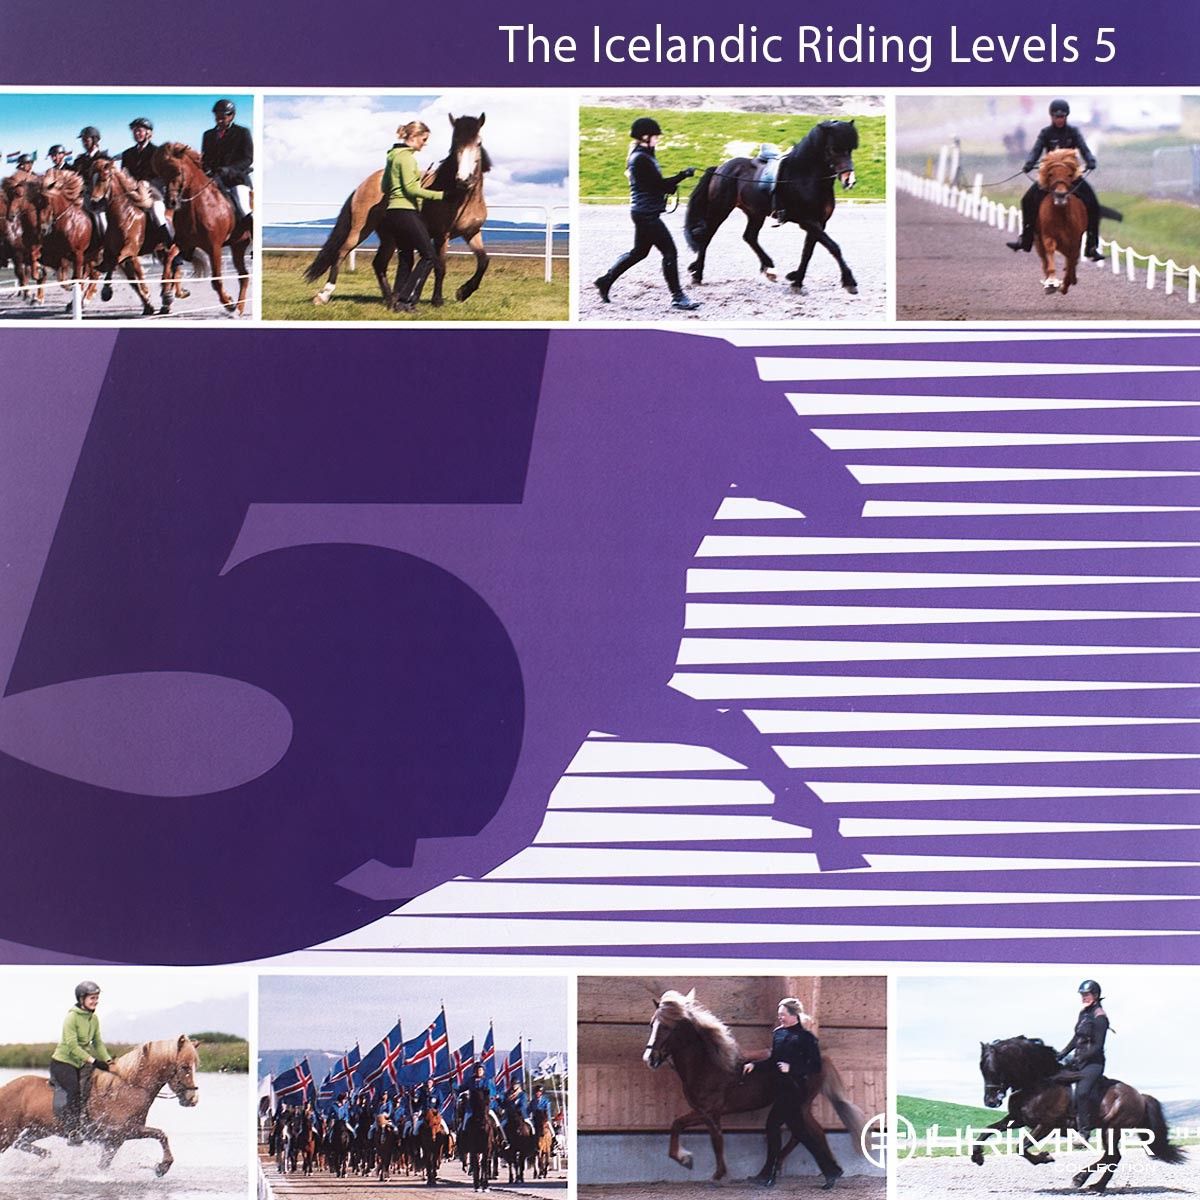 The Icelandic Riding levels 5